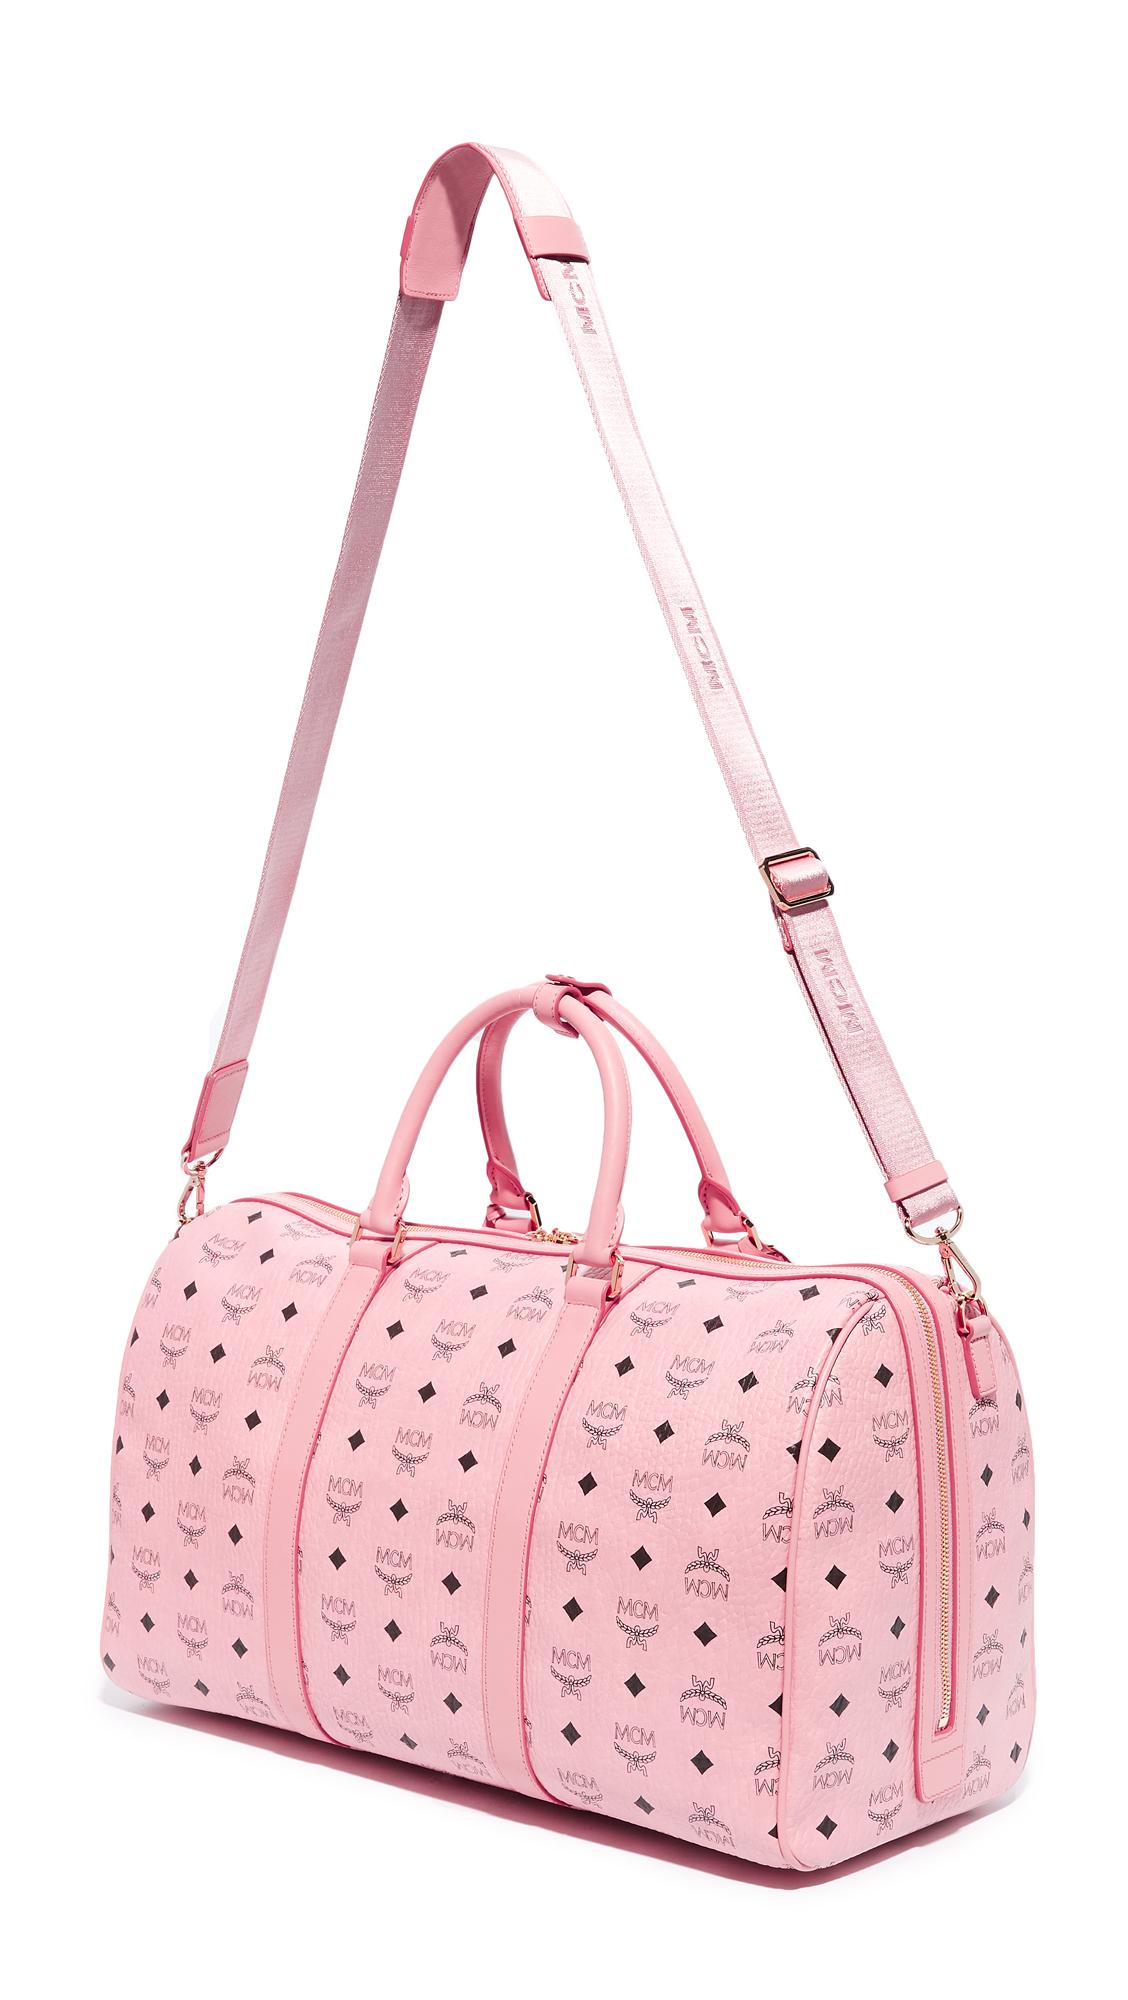 MCM Leather Weekender Bag in Soft Pink (Pink) - Lyst